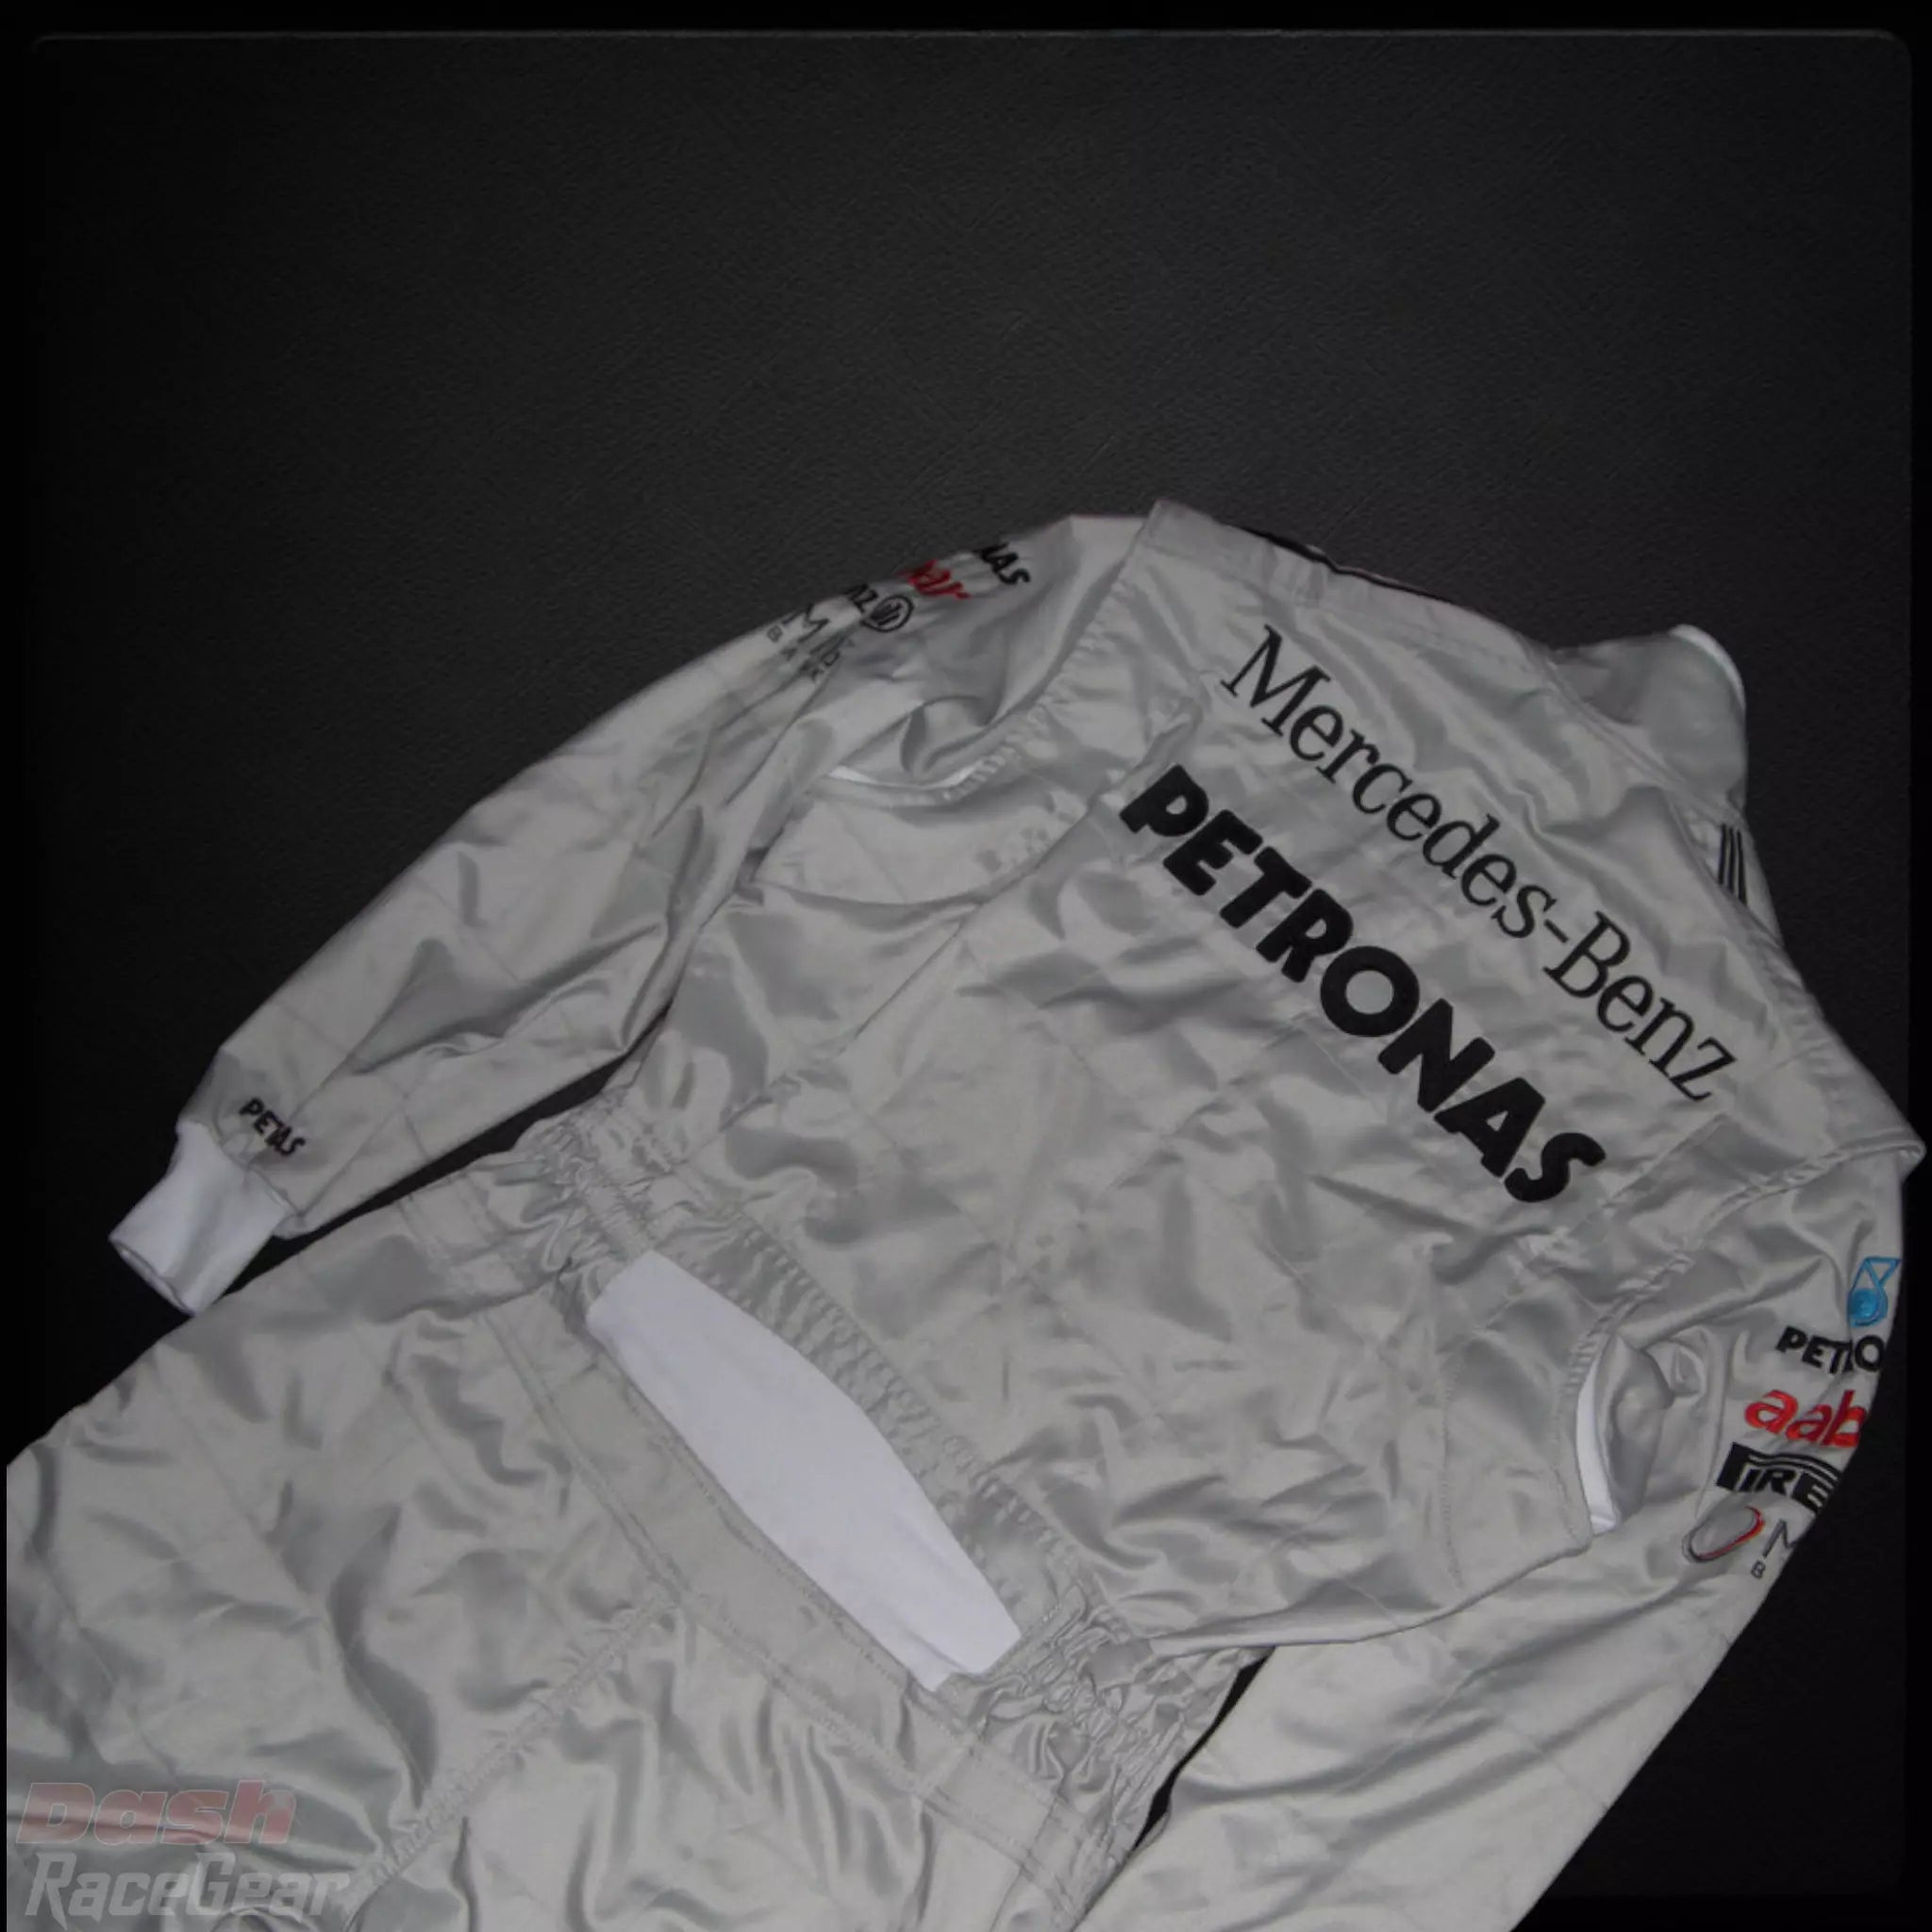 2012 Michael Schumacher Mercedes Benz F1 Embroidered Race Suit